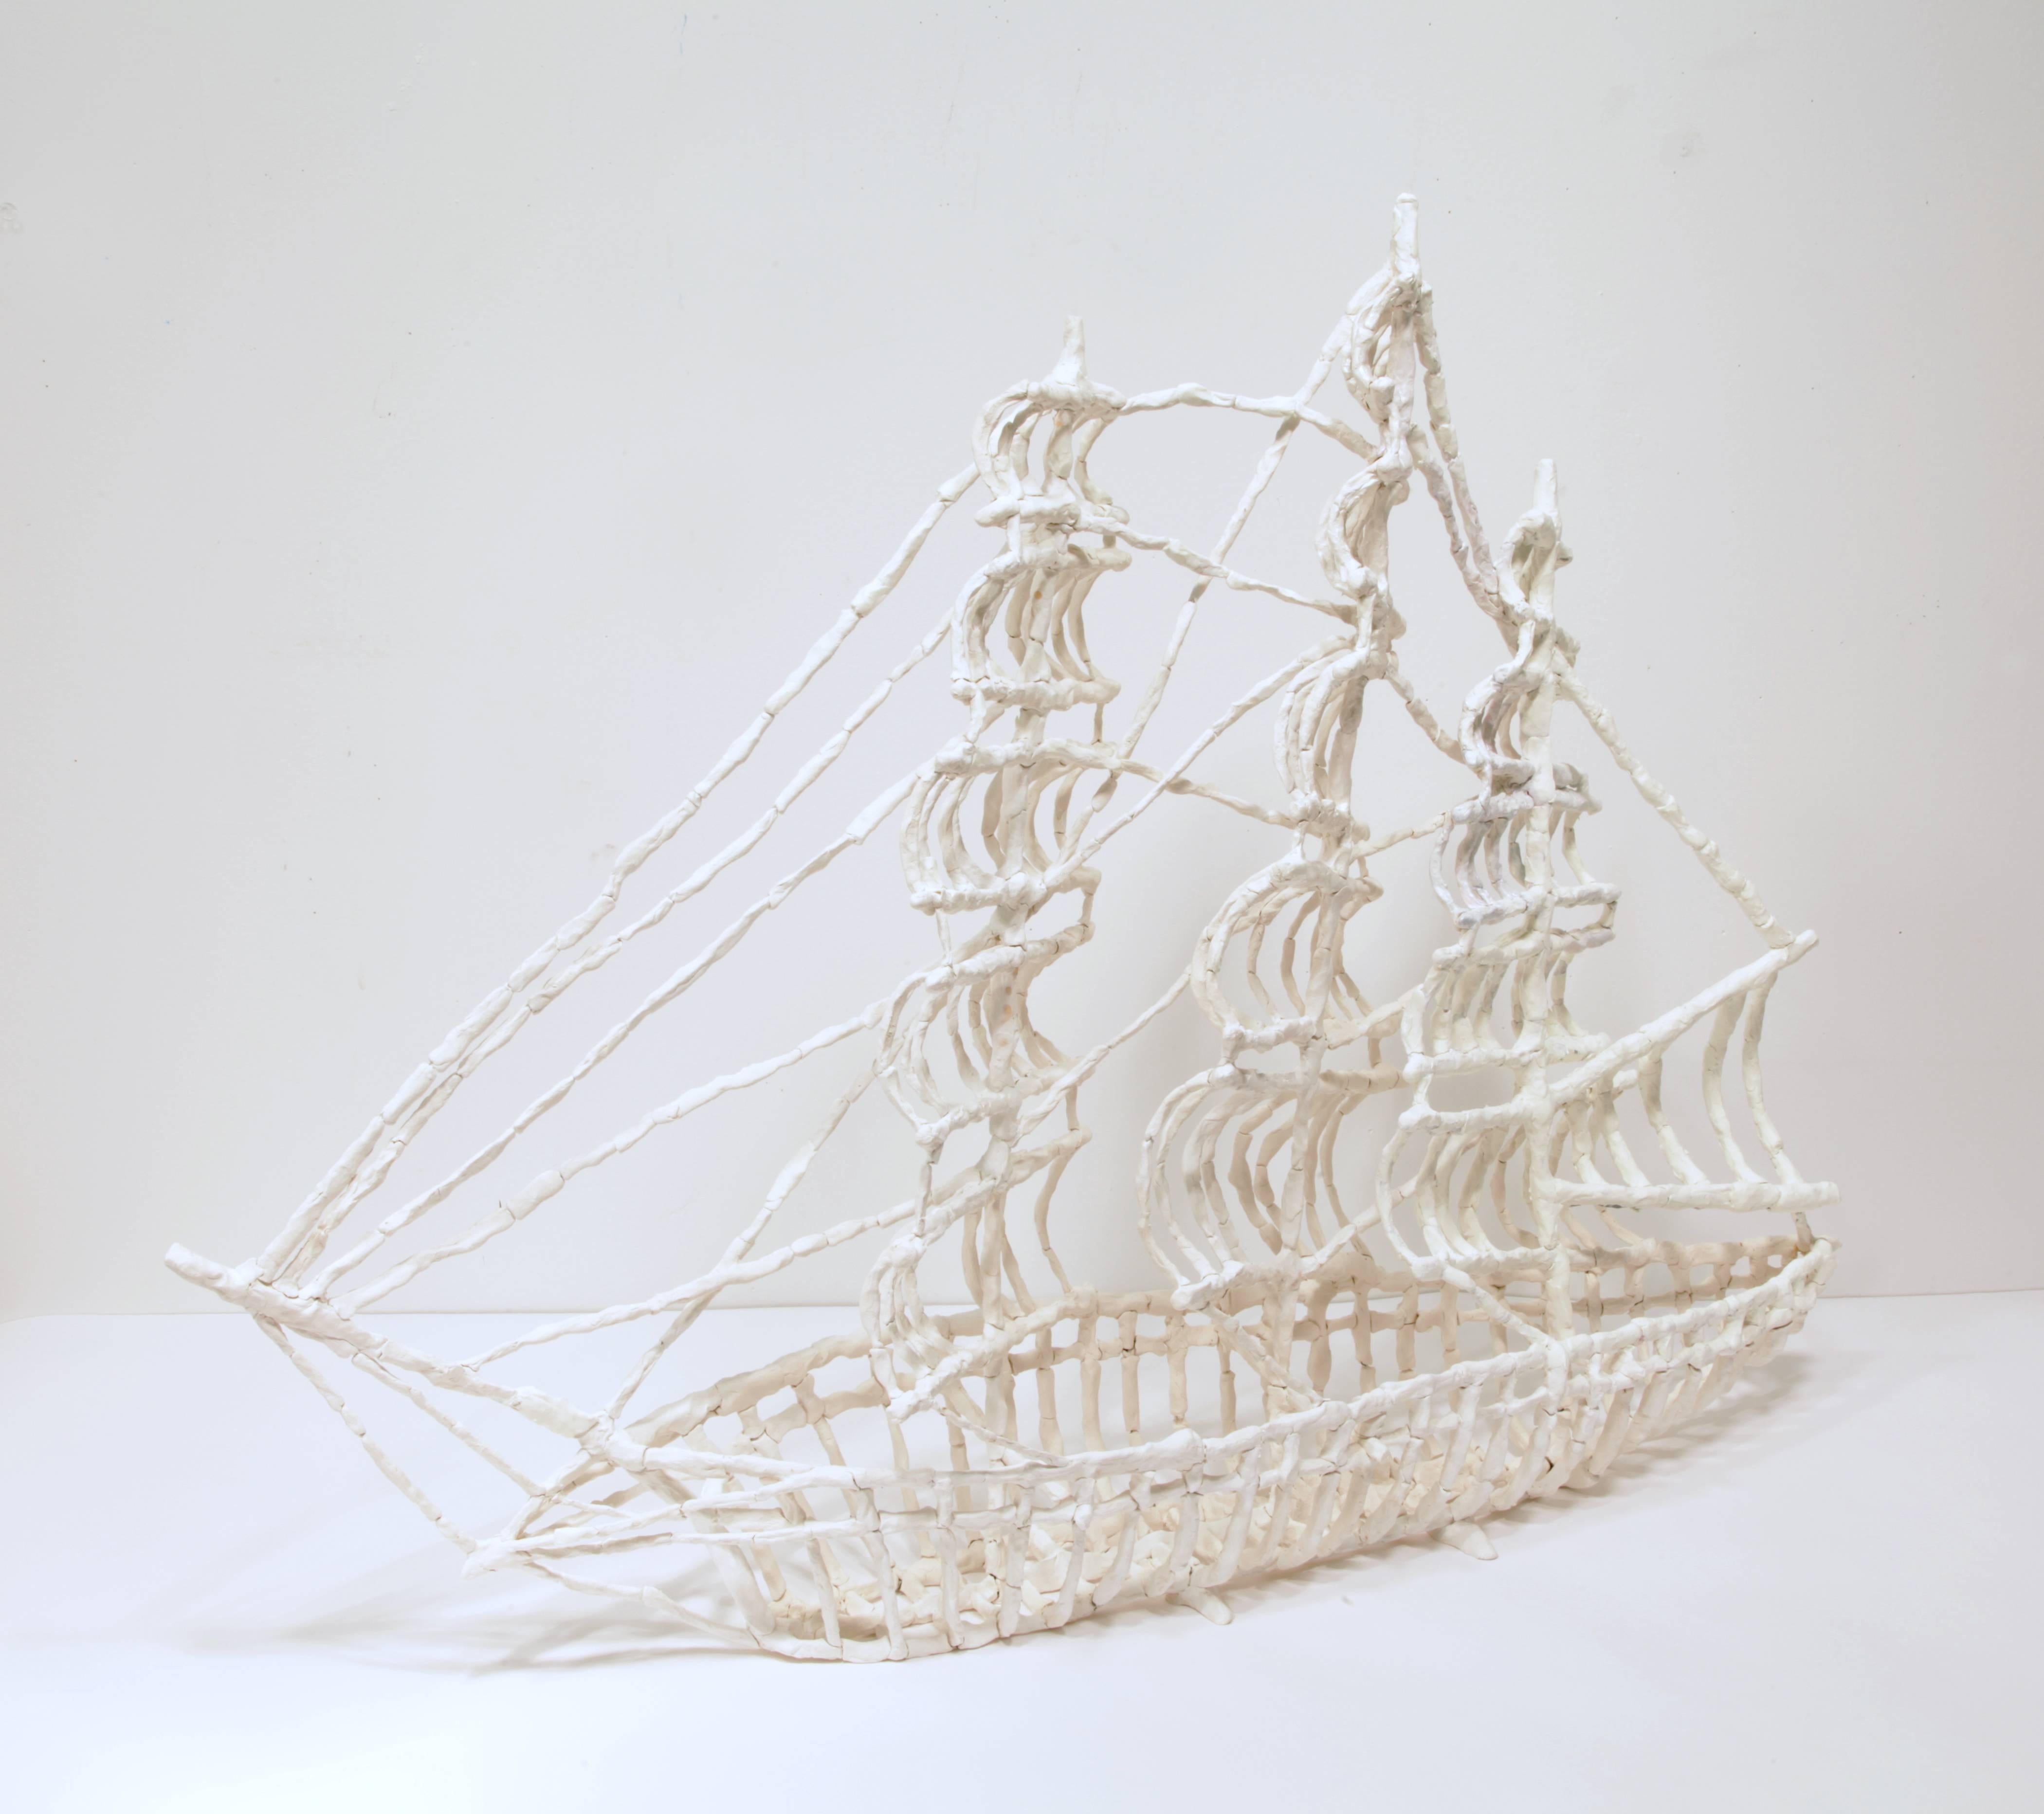 Bone Clipper Ship 1 - Sculpture by Valerie Hegarty